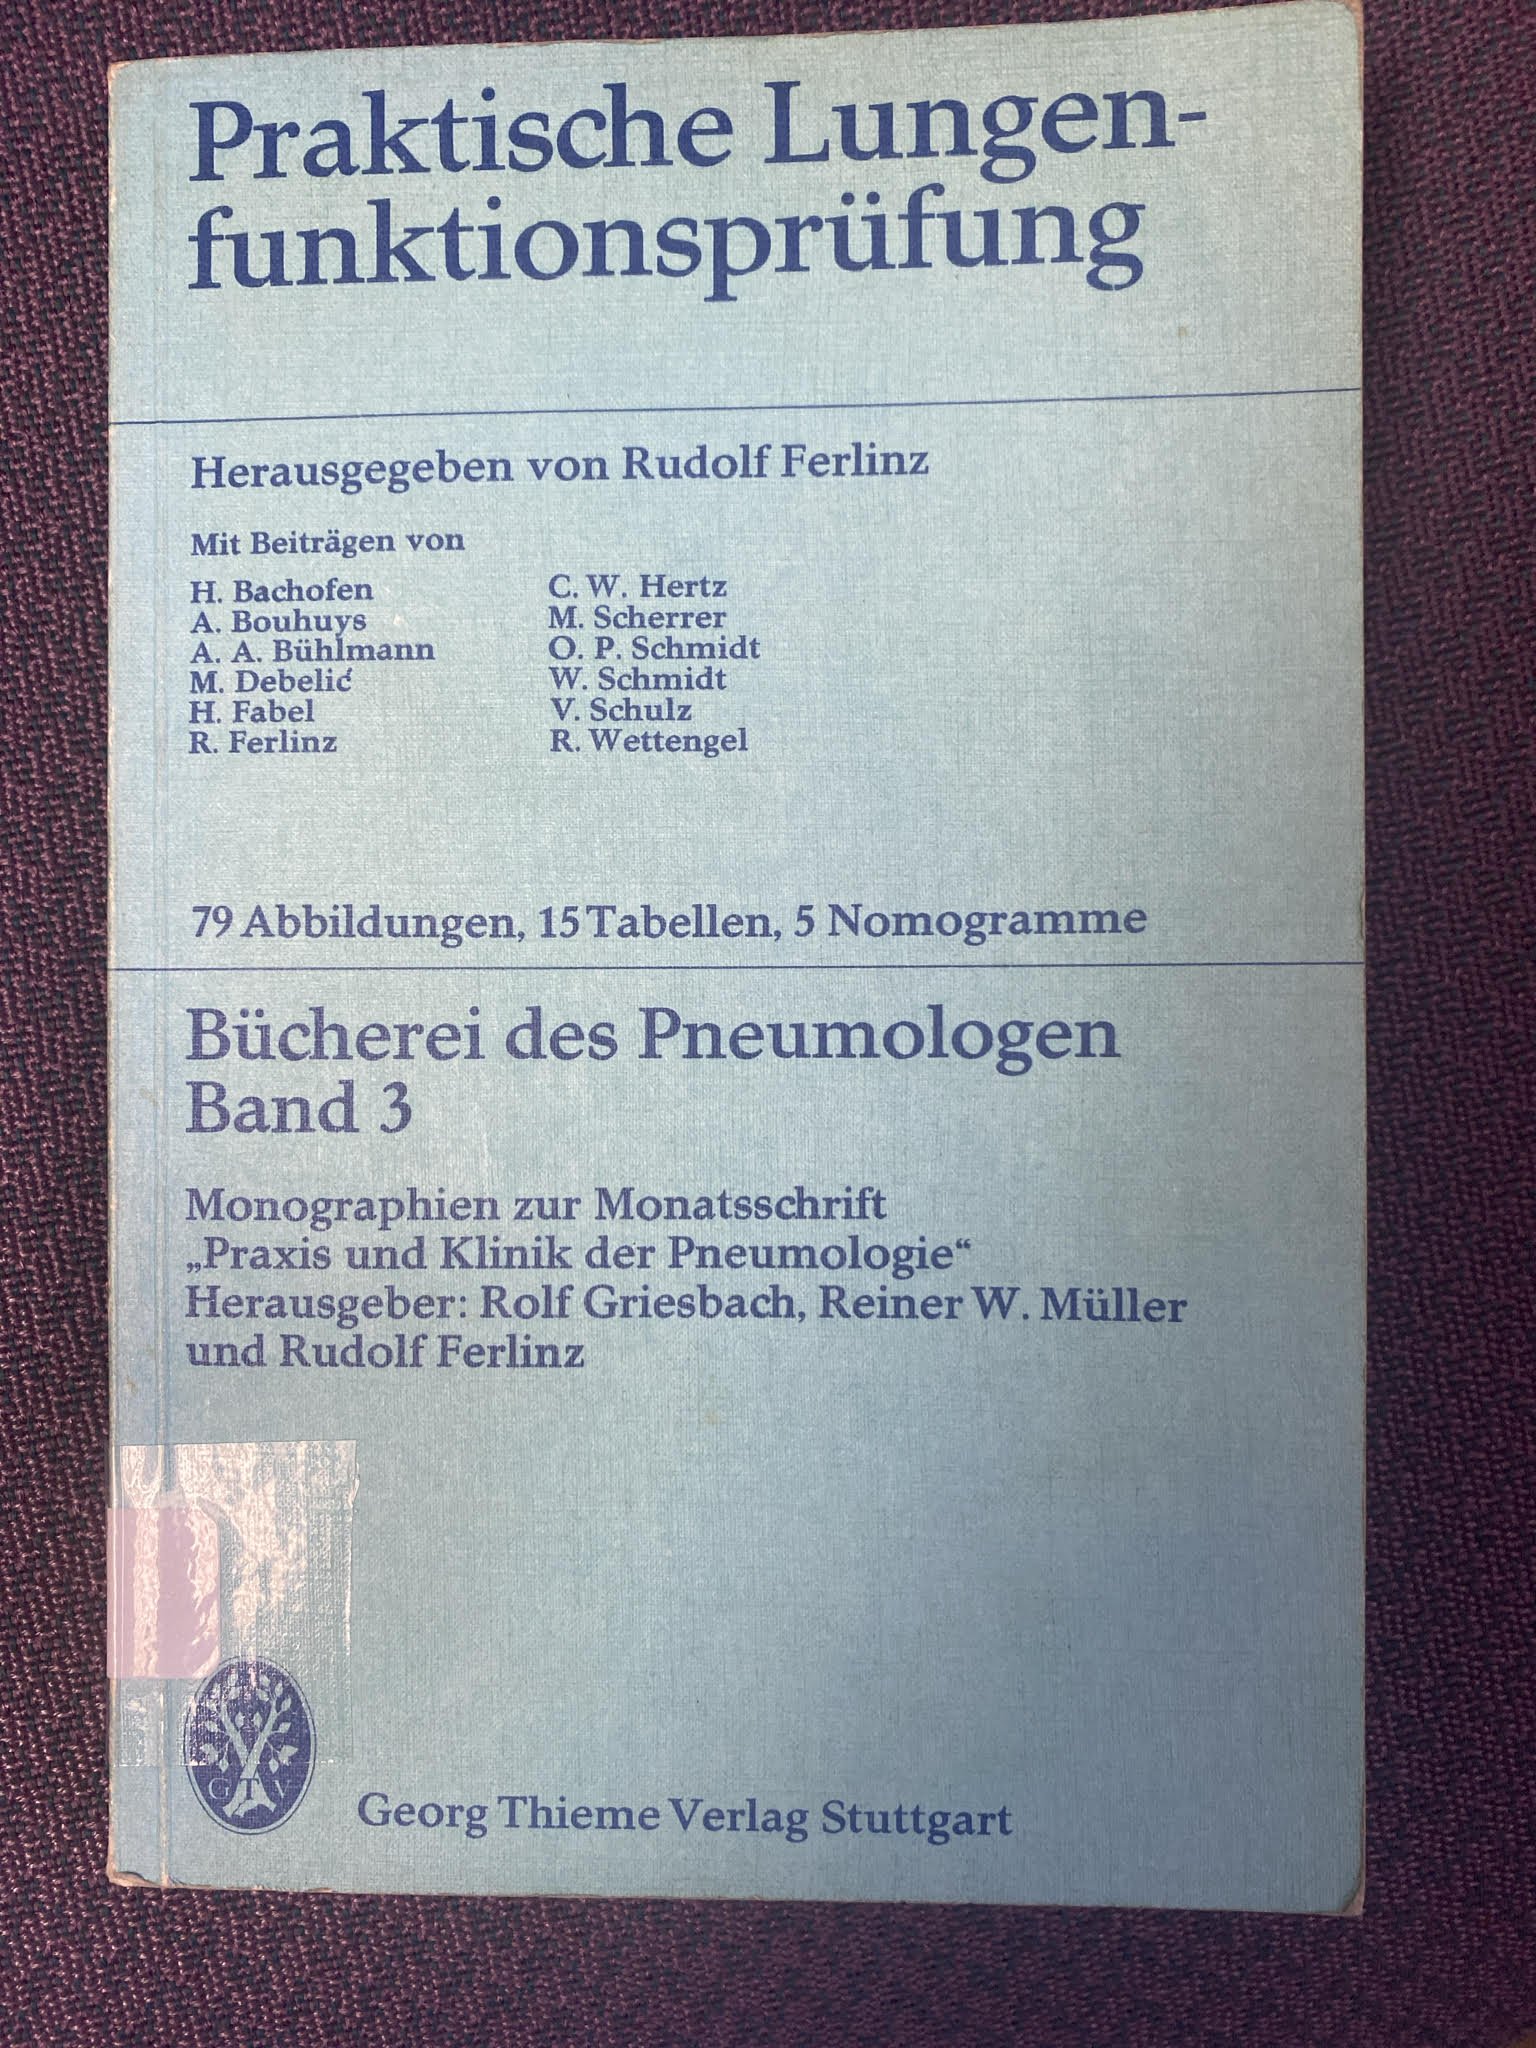 Praktische Lungenfunktionsprüfung (Krankenhausmuseum Bielefeld e.V. CC BY-NC-SA)